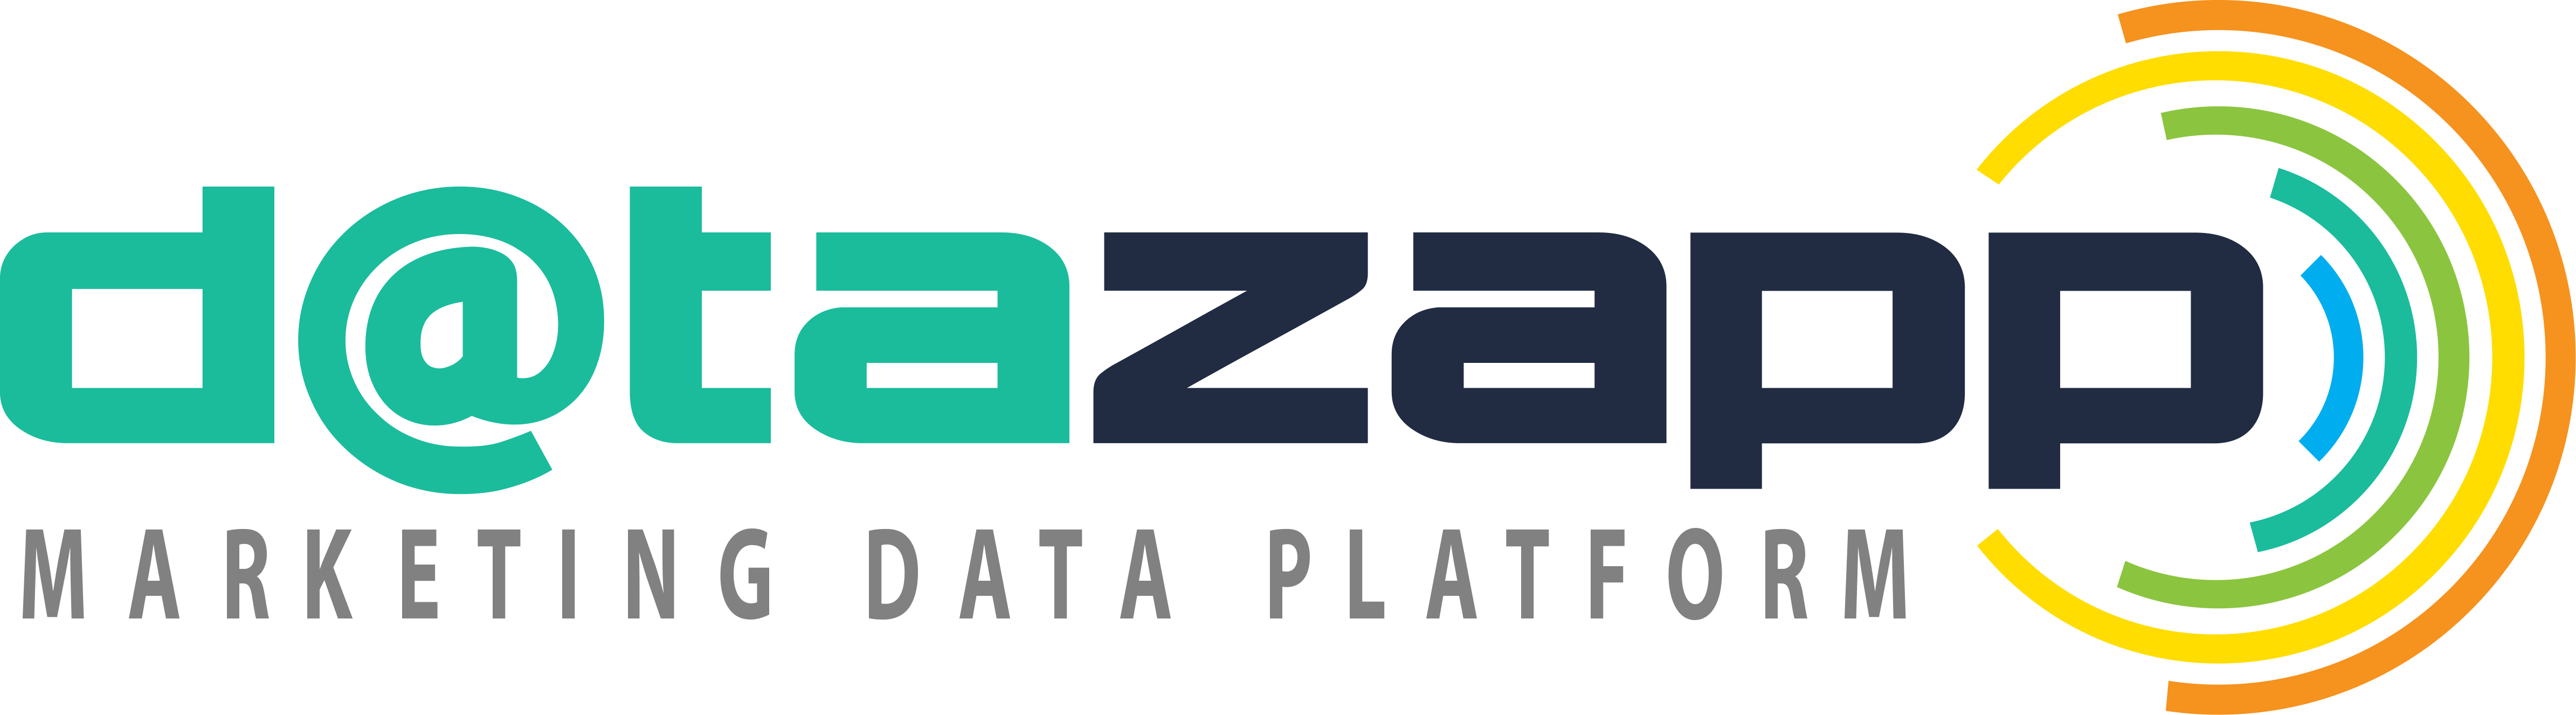 Digital Marketing Firm Datazapp.com Launches Platform to Build Political Donor Audiences